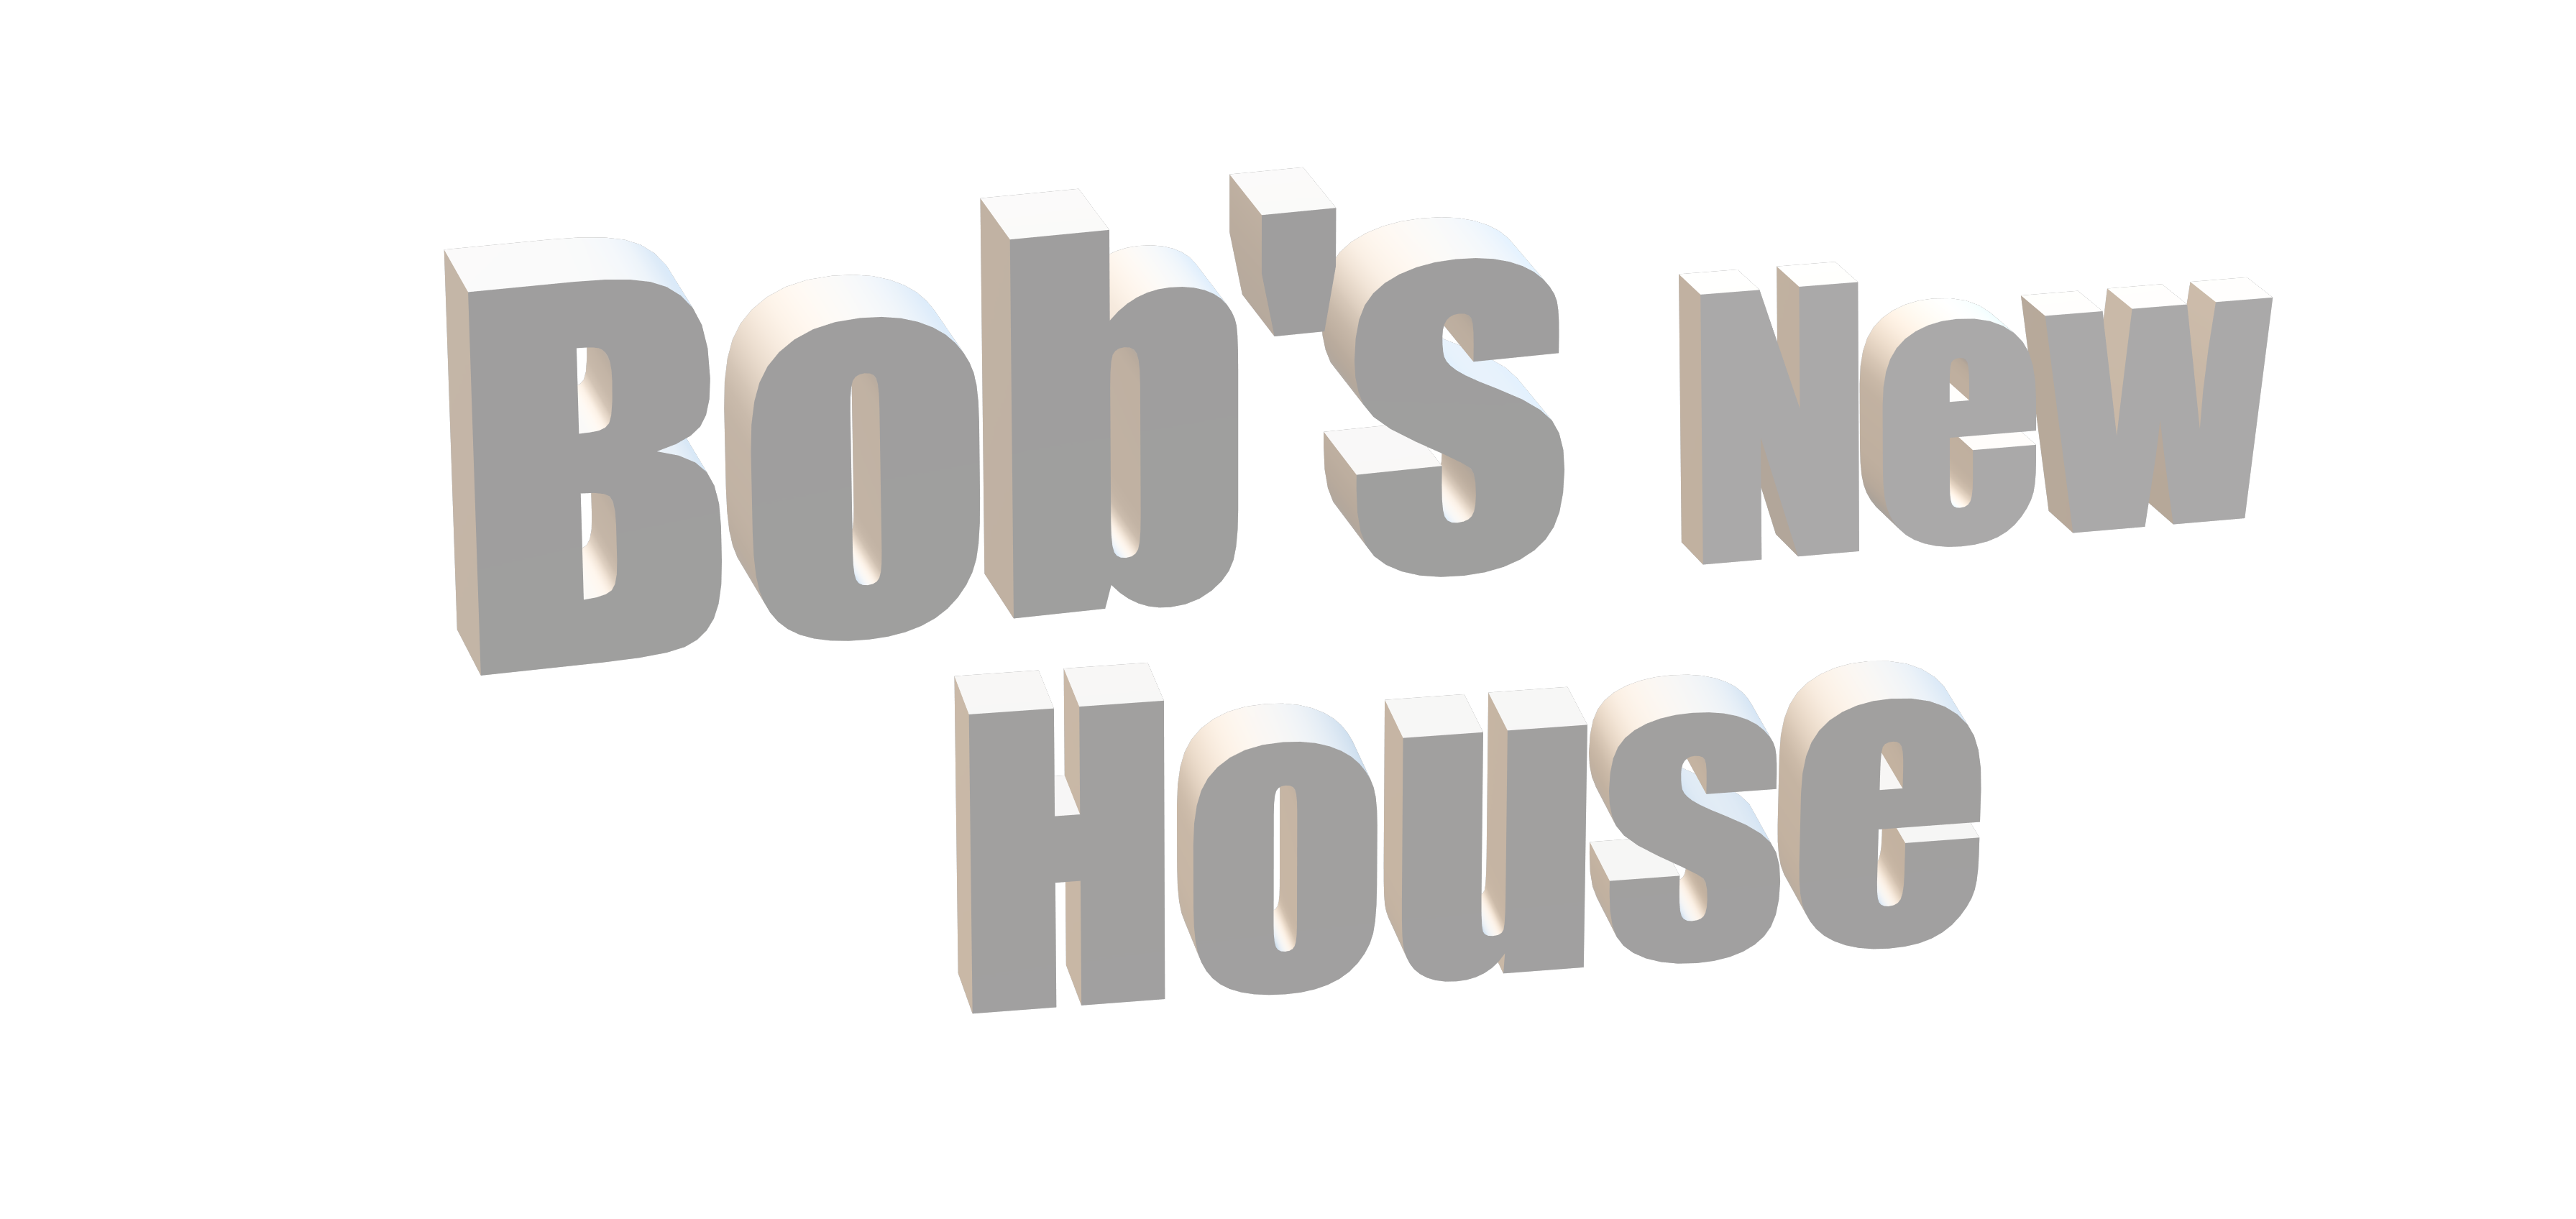 Bob's New House (v2.0.0)